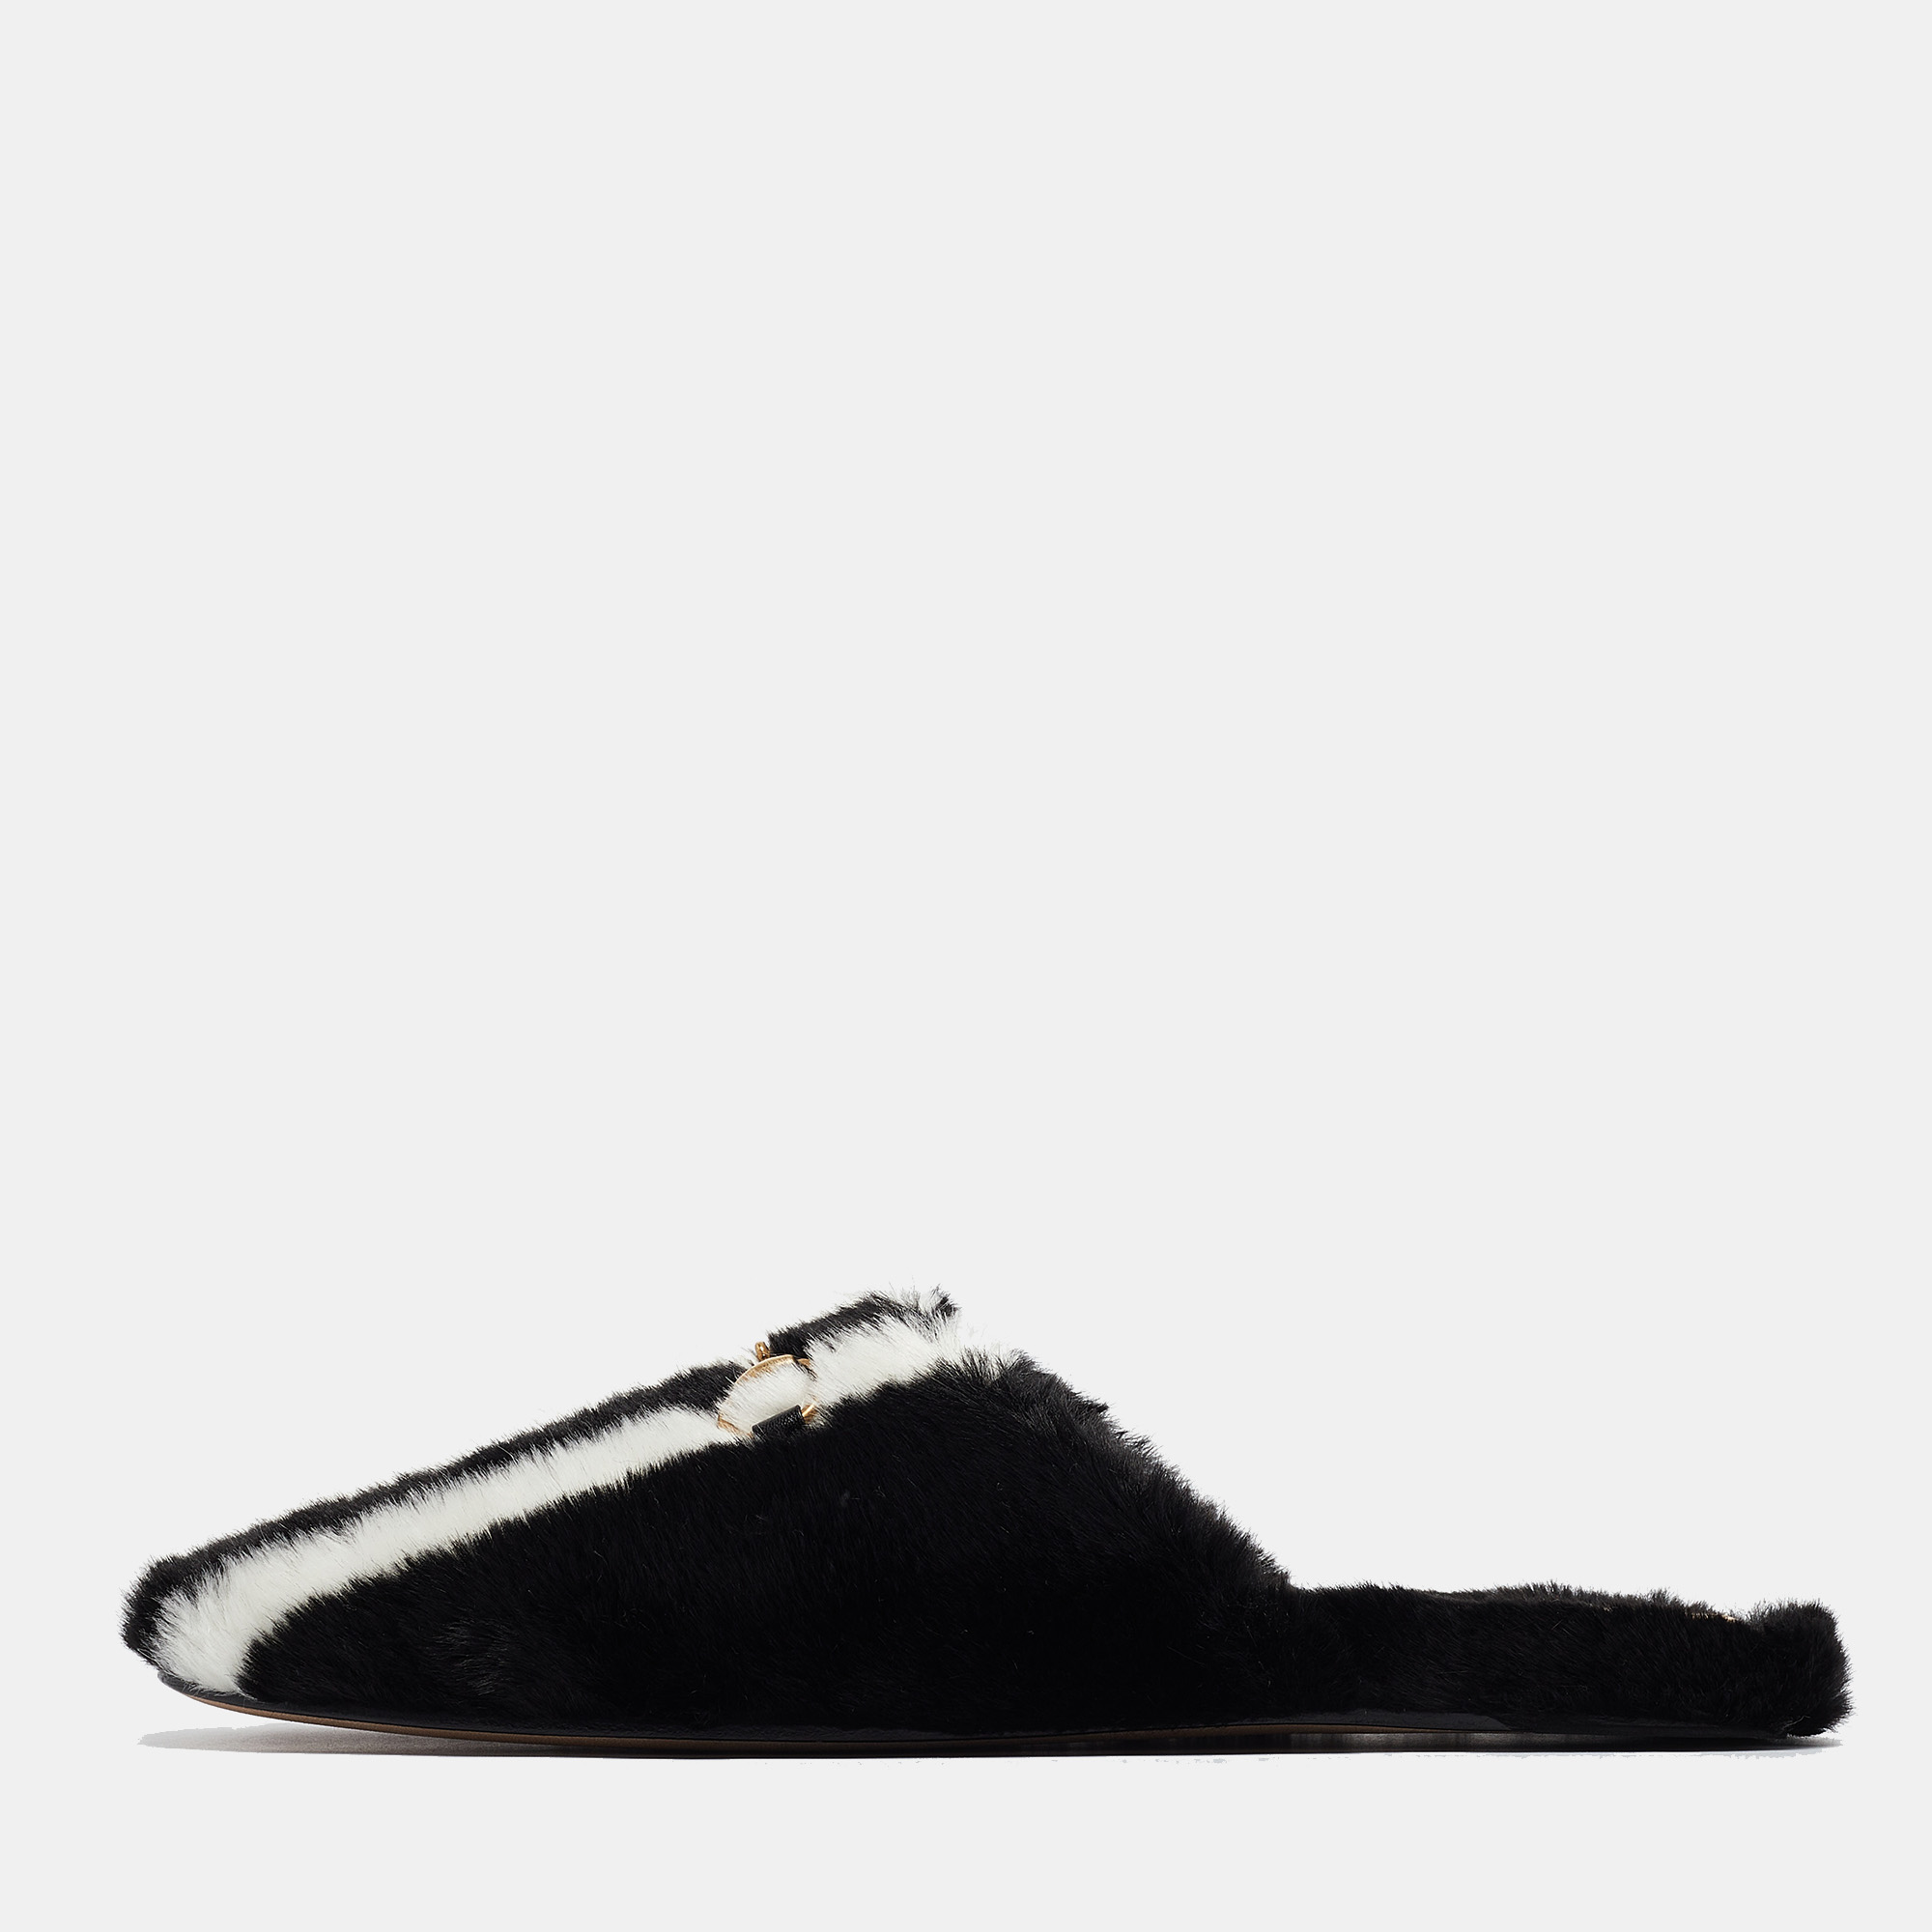 Gucci x adidas black/white stripes fur horsebit flat mules size 38